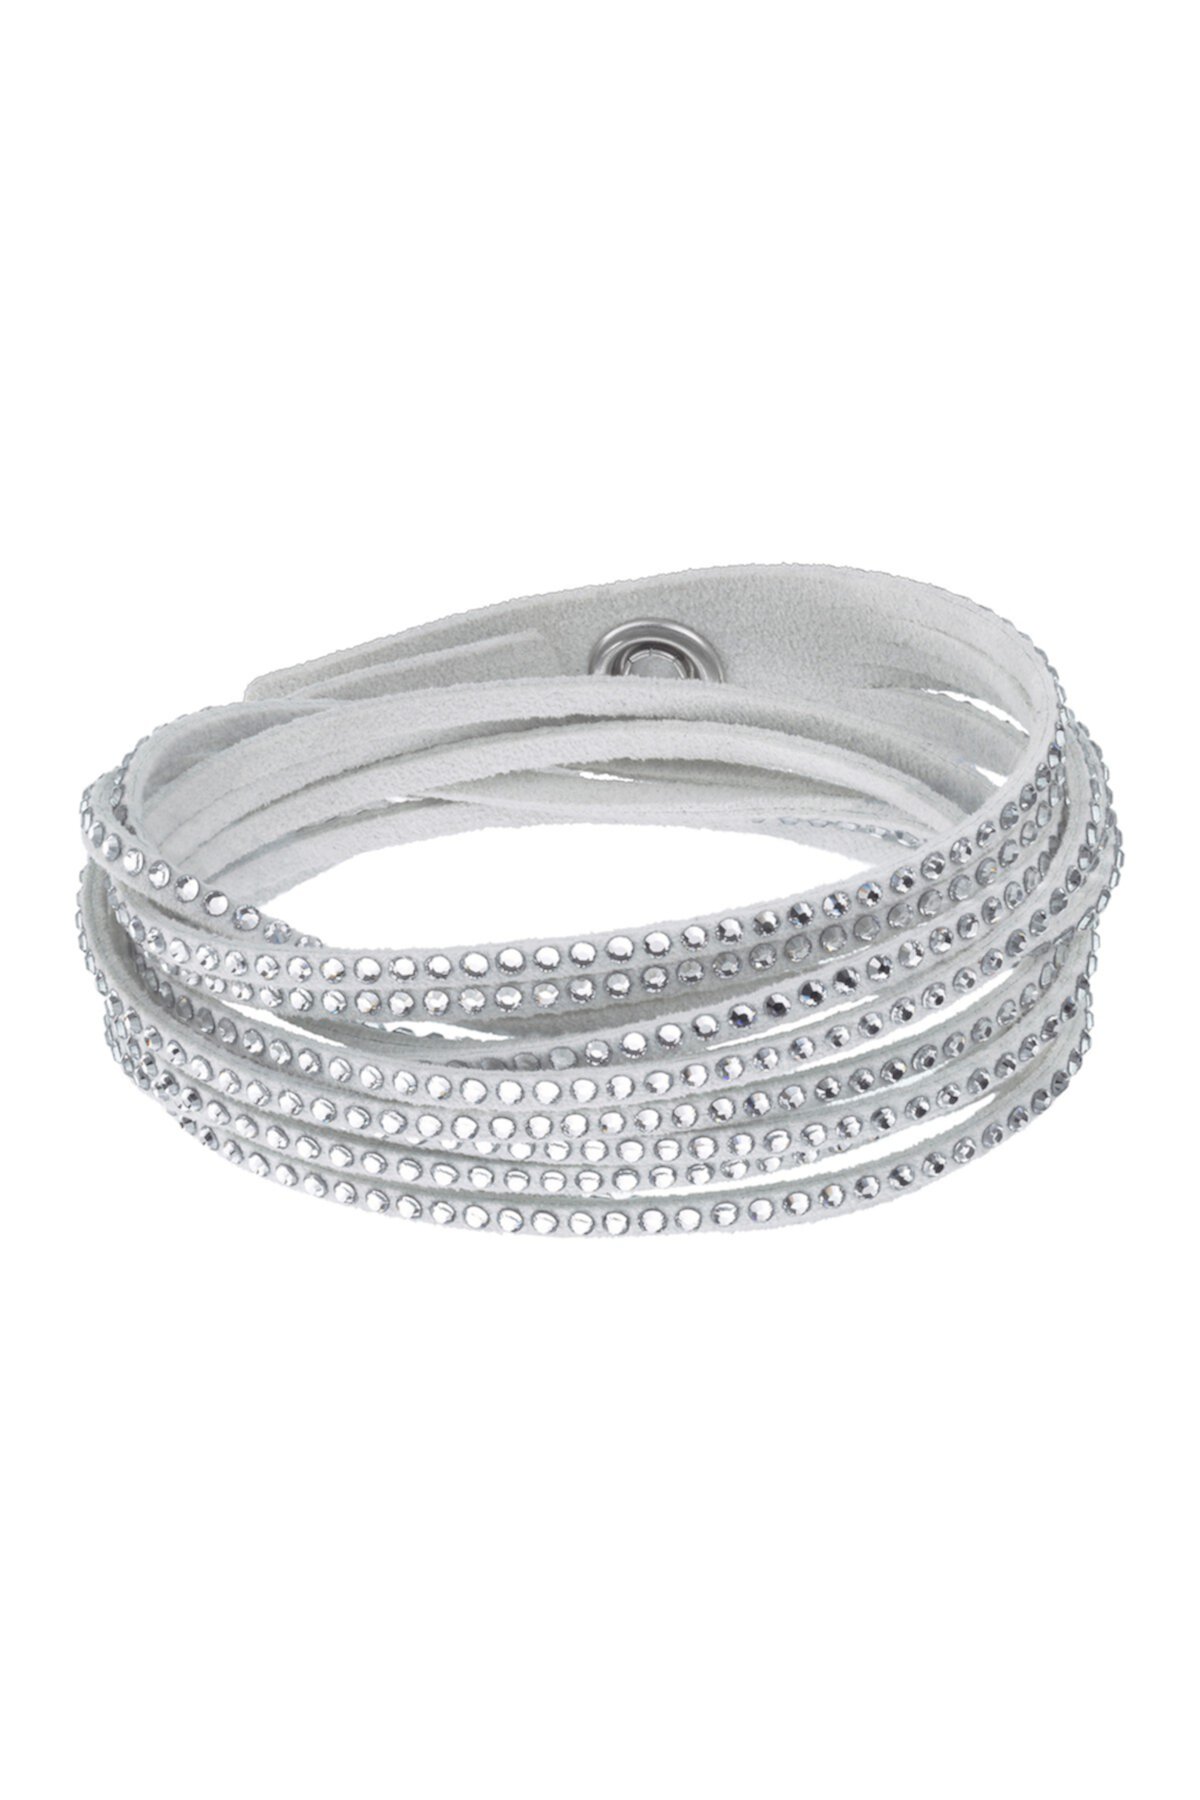 Multi Row Swarovski Crystal Wrap Bracelet Swarovski